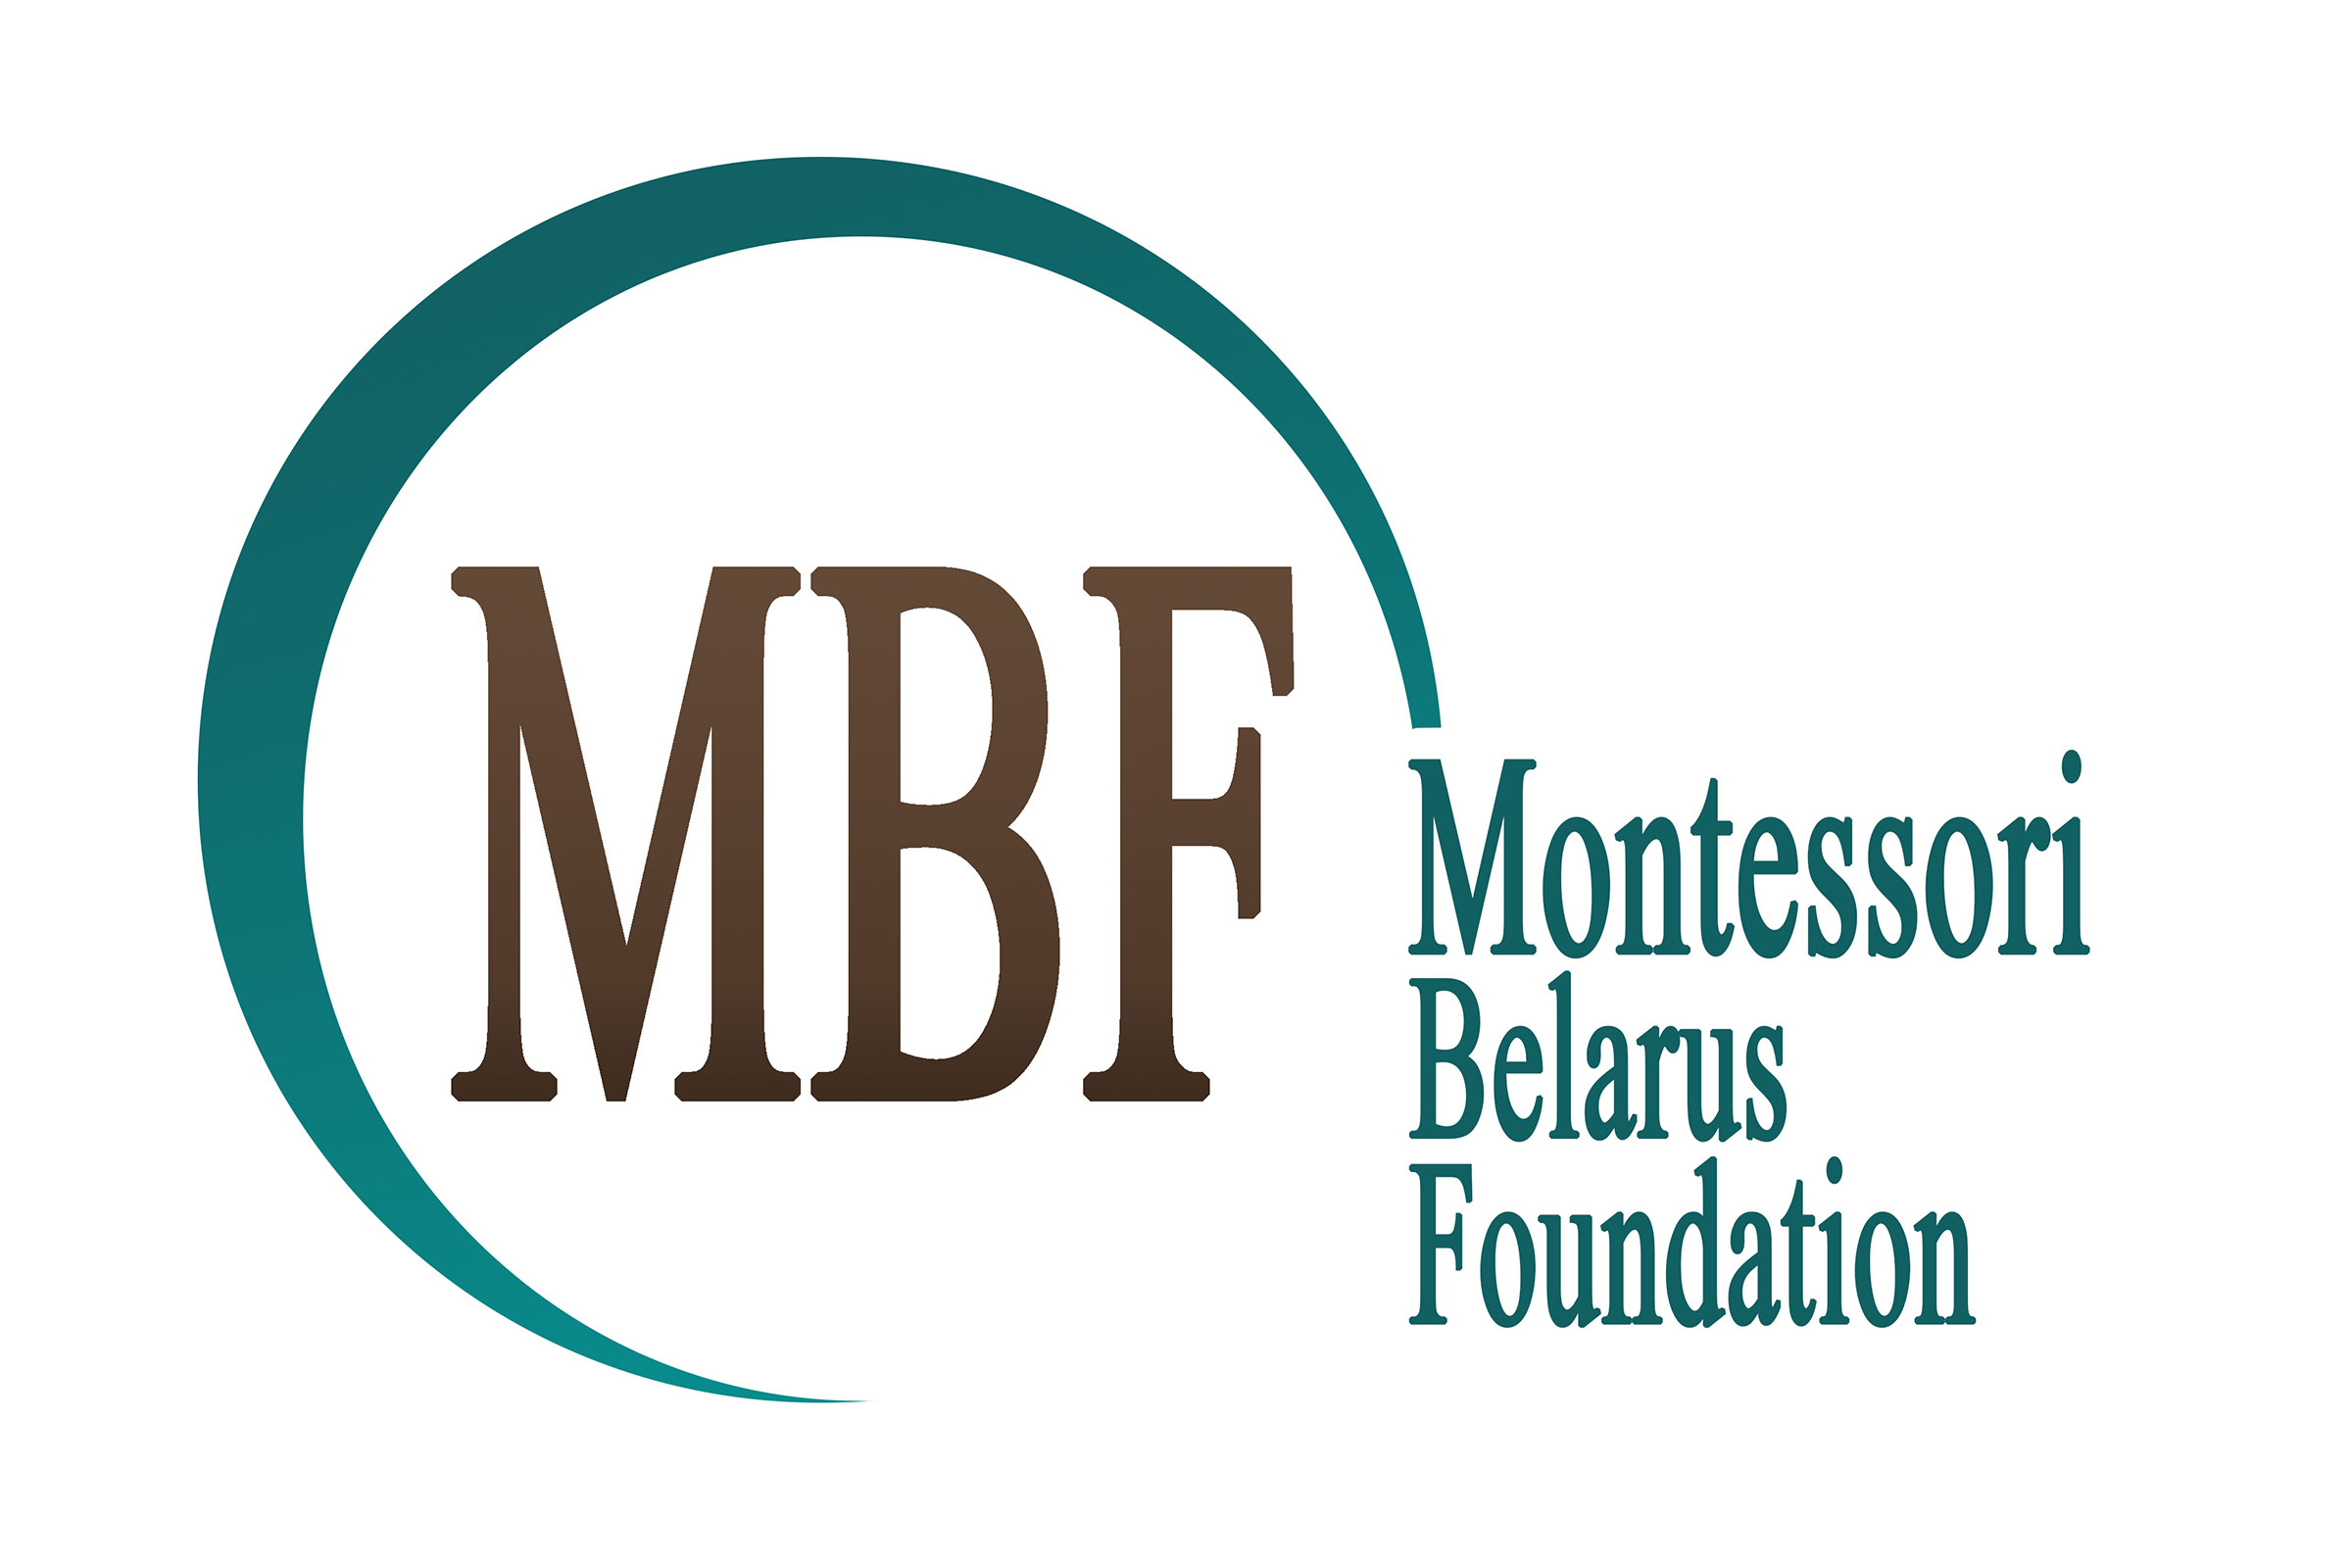 Montessori Belarus Foundation logo